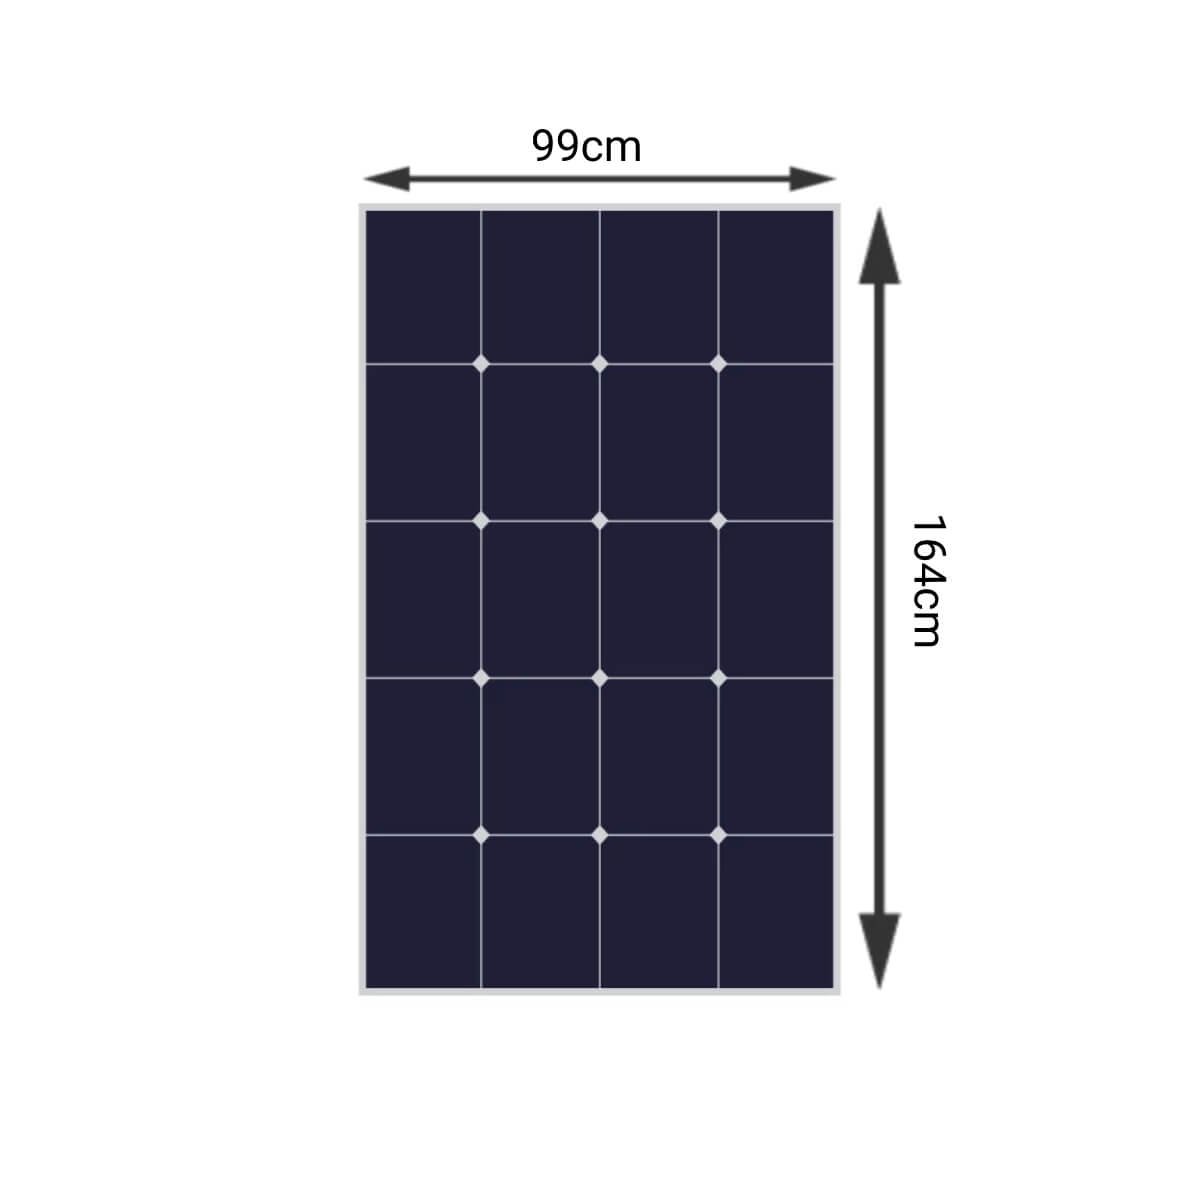 600W Solar Panel Kit – 2x 300W dimensions